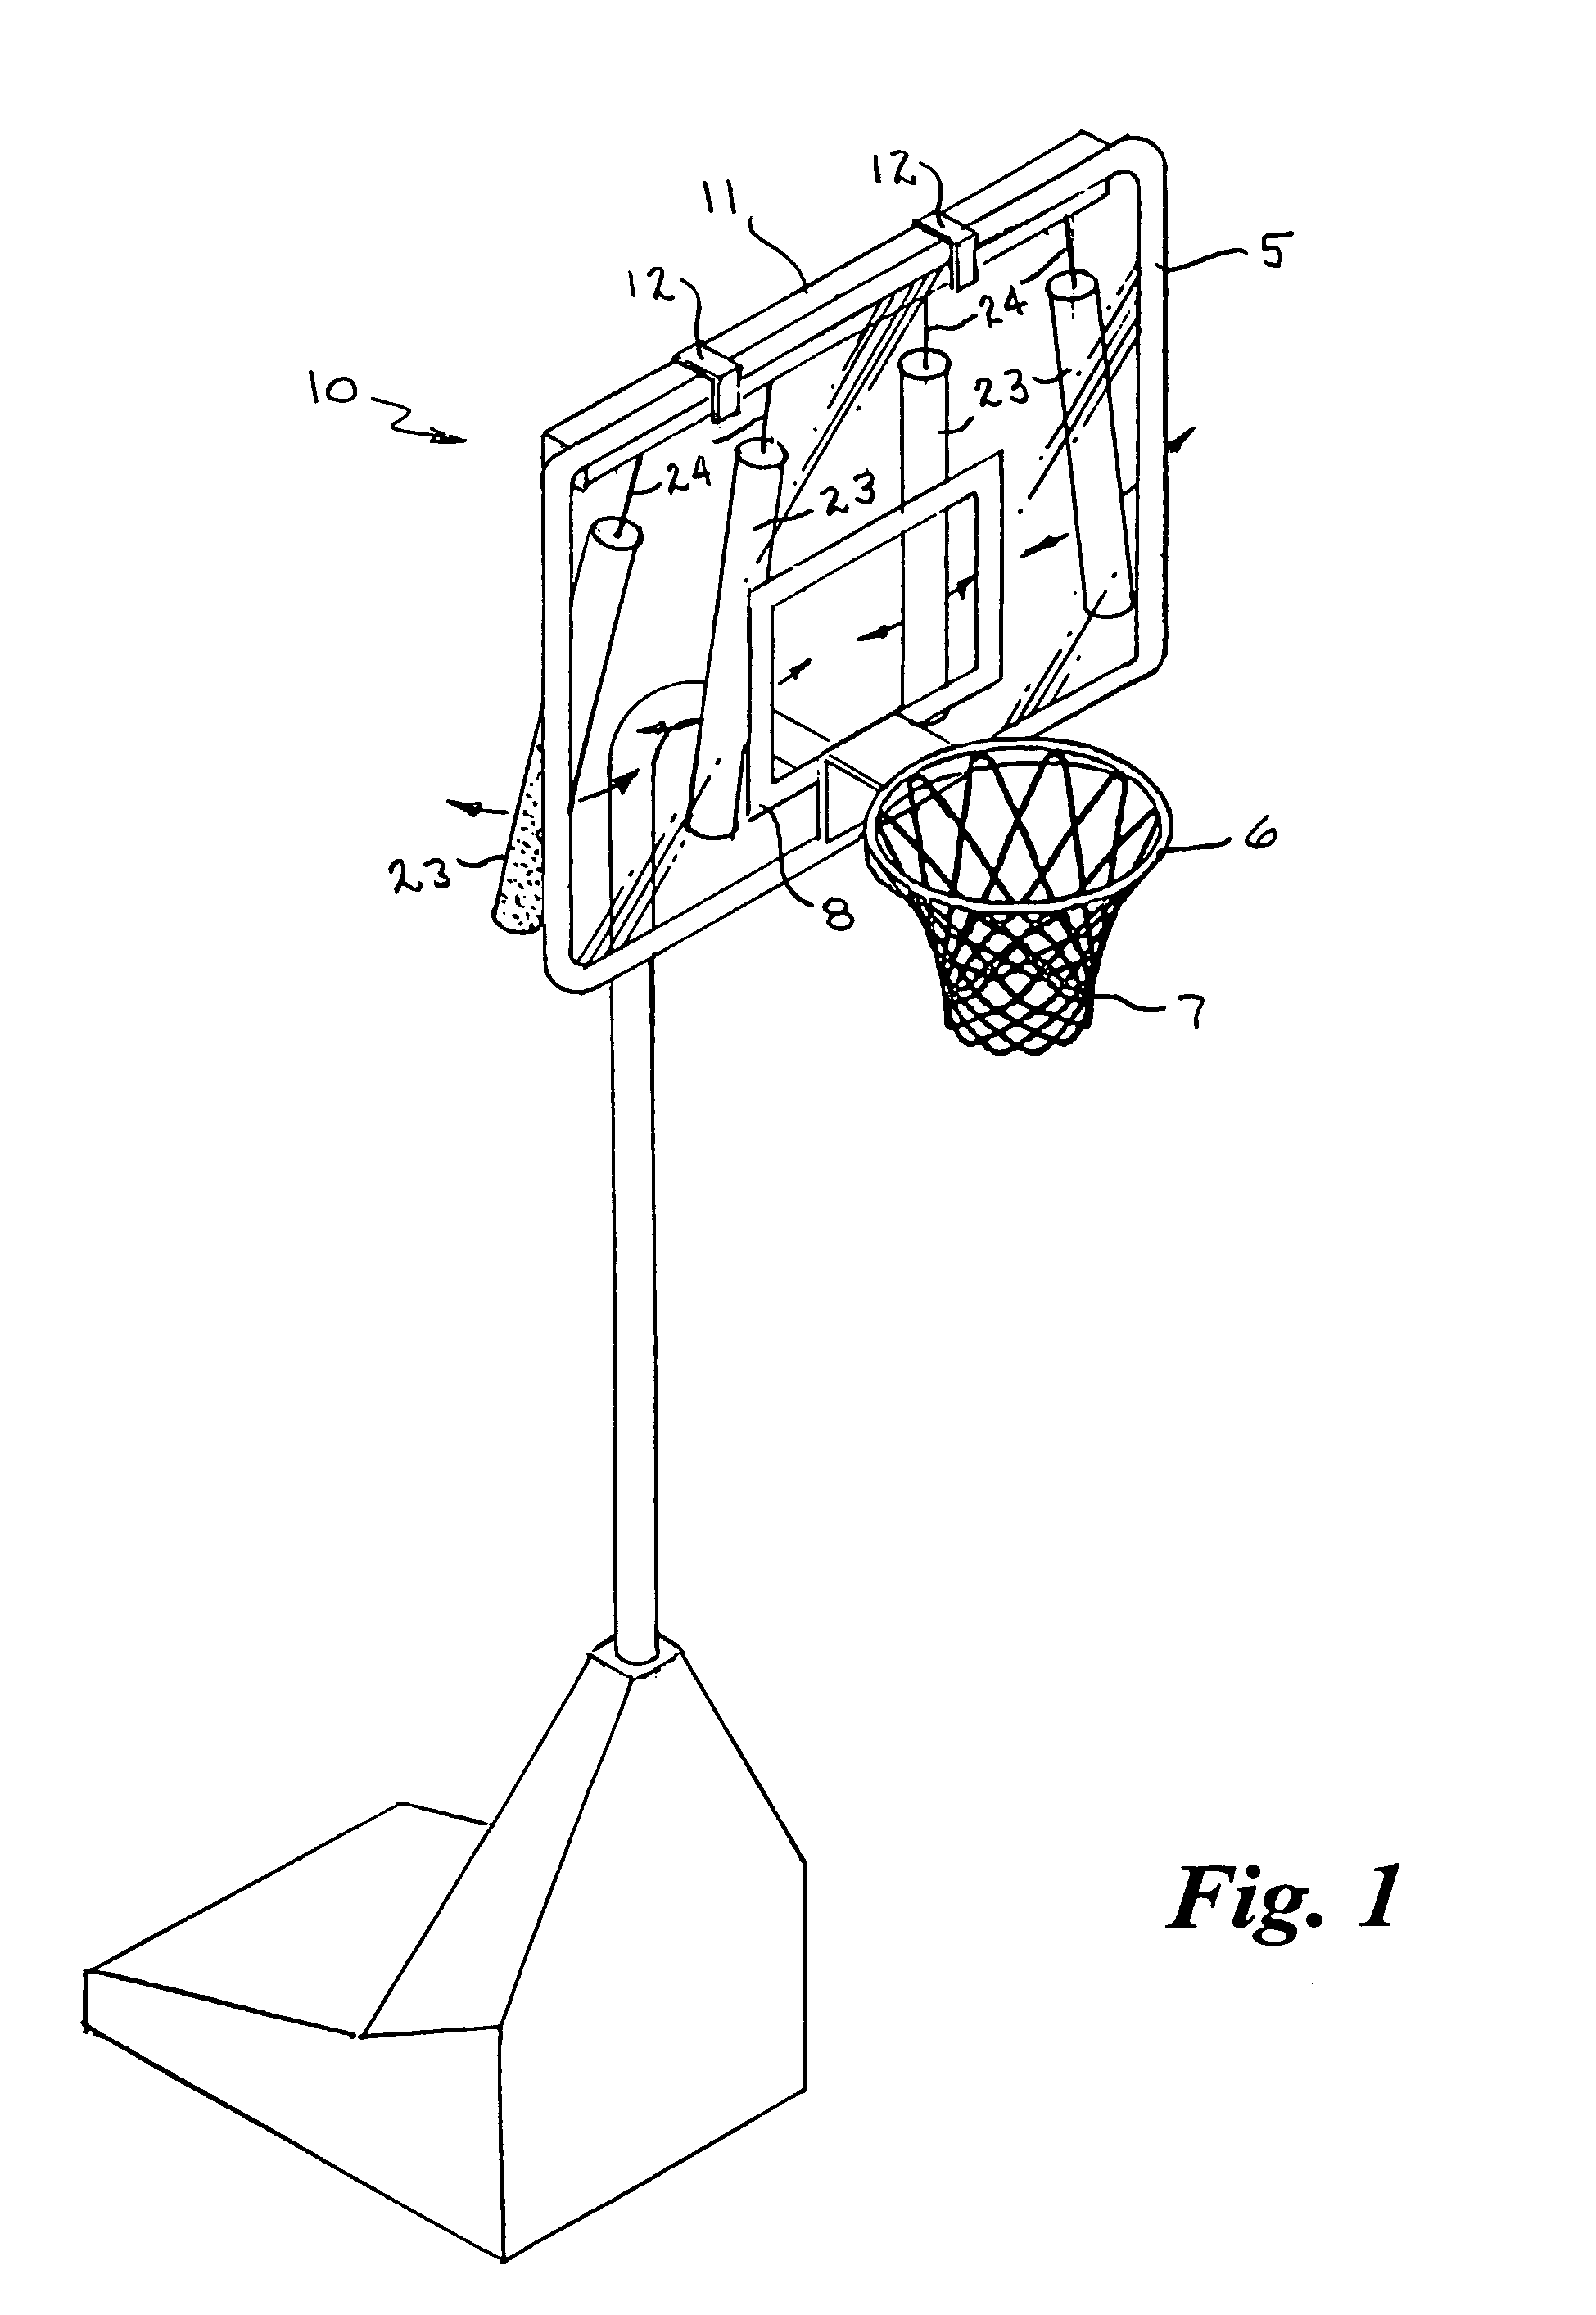 Basketball training device and method